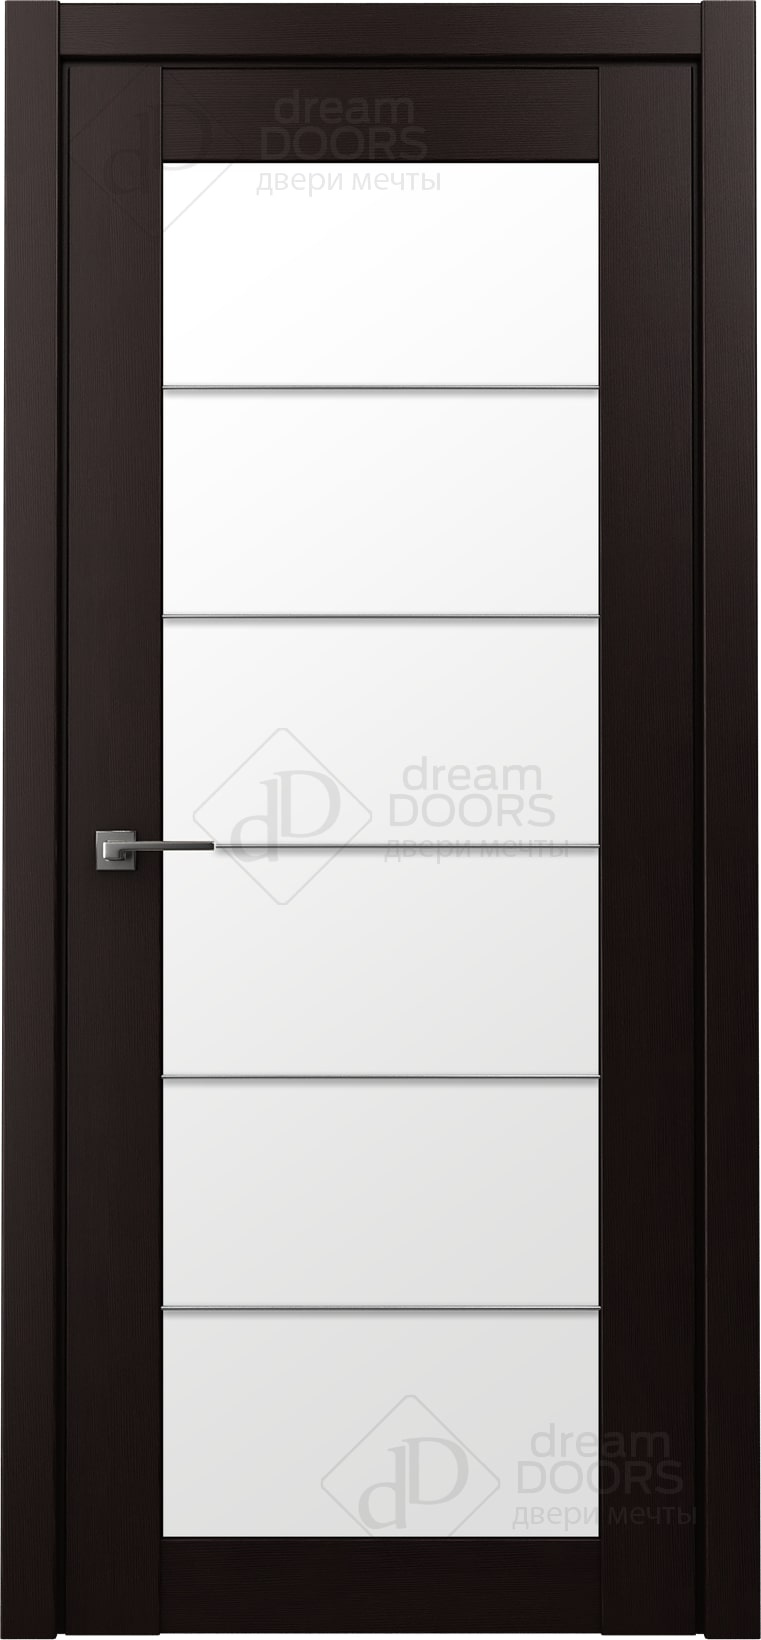 Dream Doors Межкомнатная дверь Престиж с молдингом ПО, арт. 16437 - фото №15